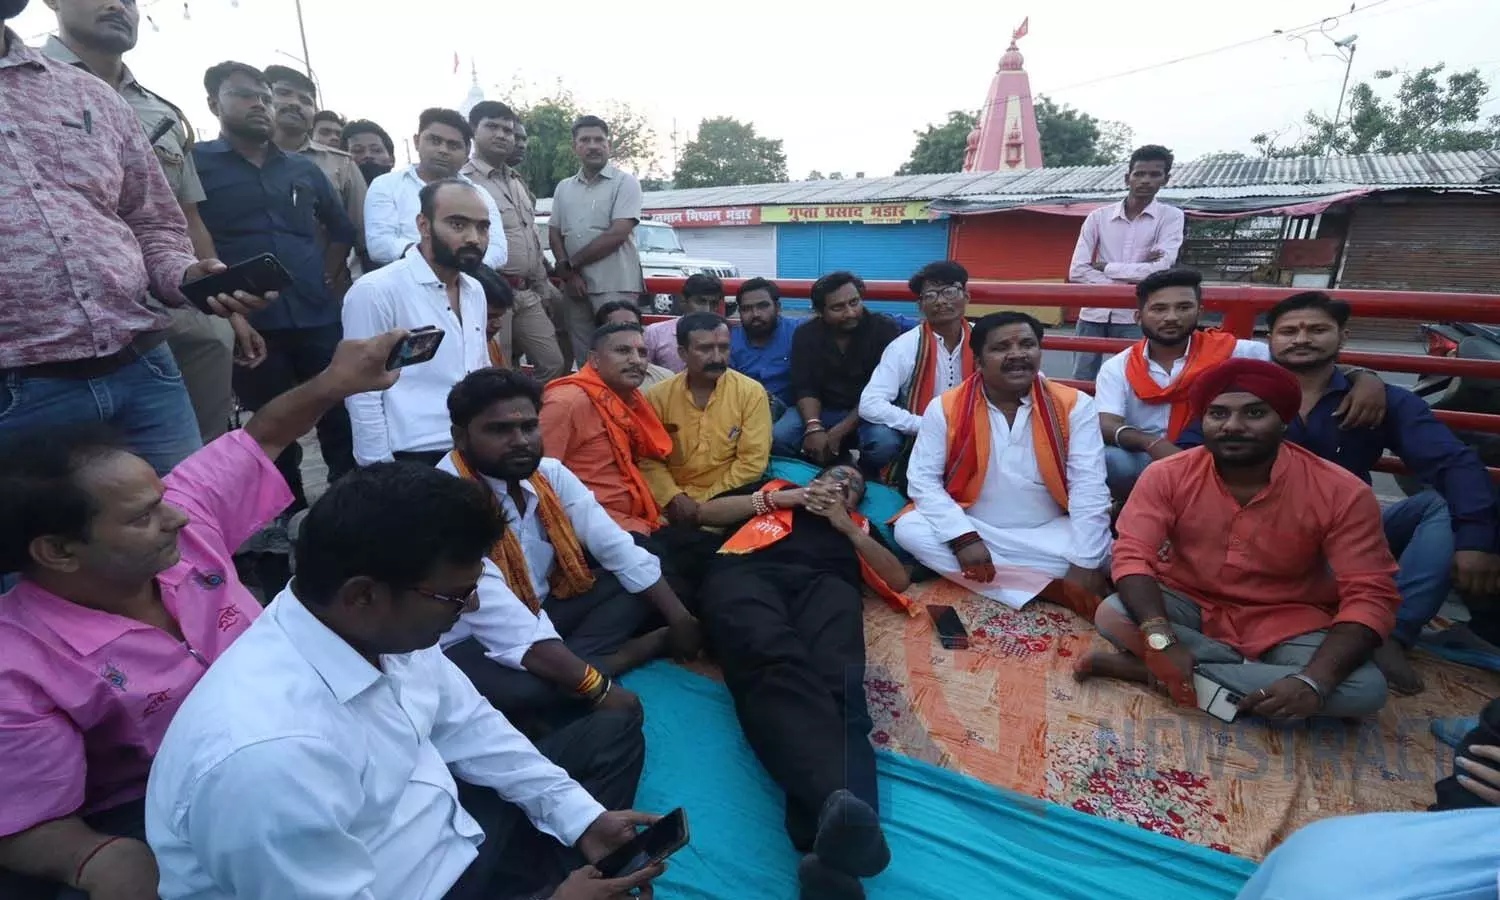 Change of religion Jitendra Narayan Tyagi became lock on the house of Wasim Rizvi, demonstration in front of Hanuman Setu